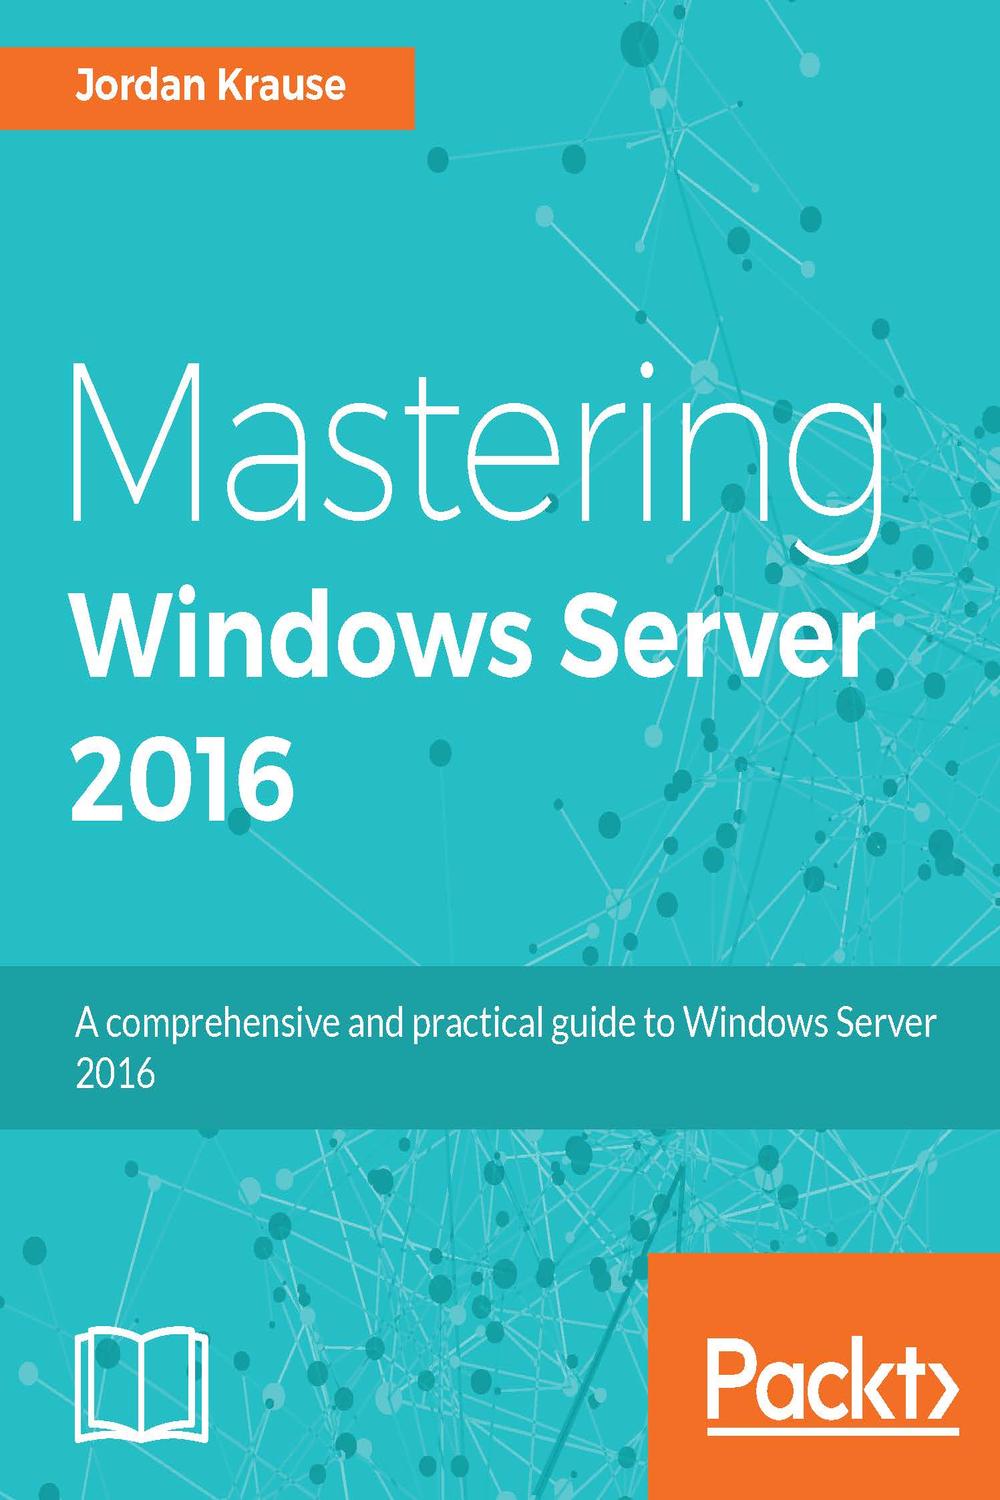 [PDF] Mastering Windows Server 2016 by Jordan Krause | Perlego